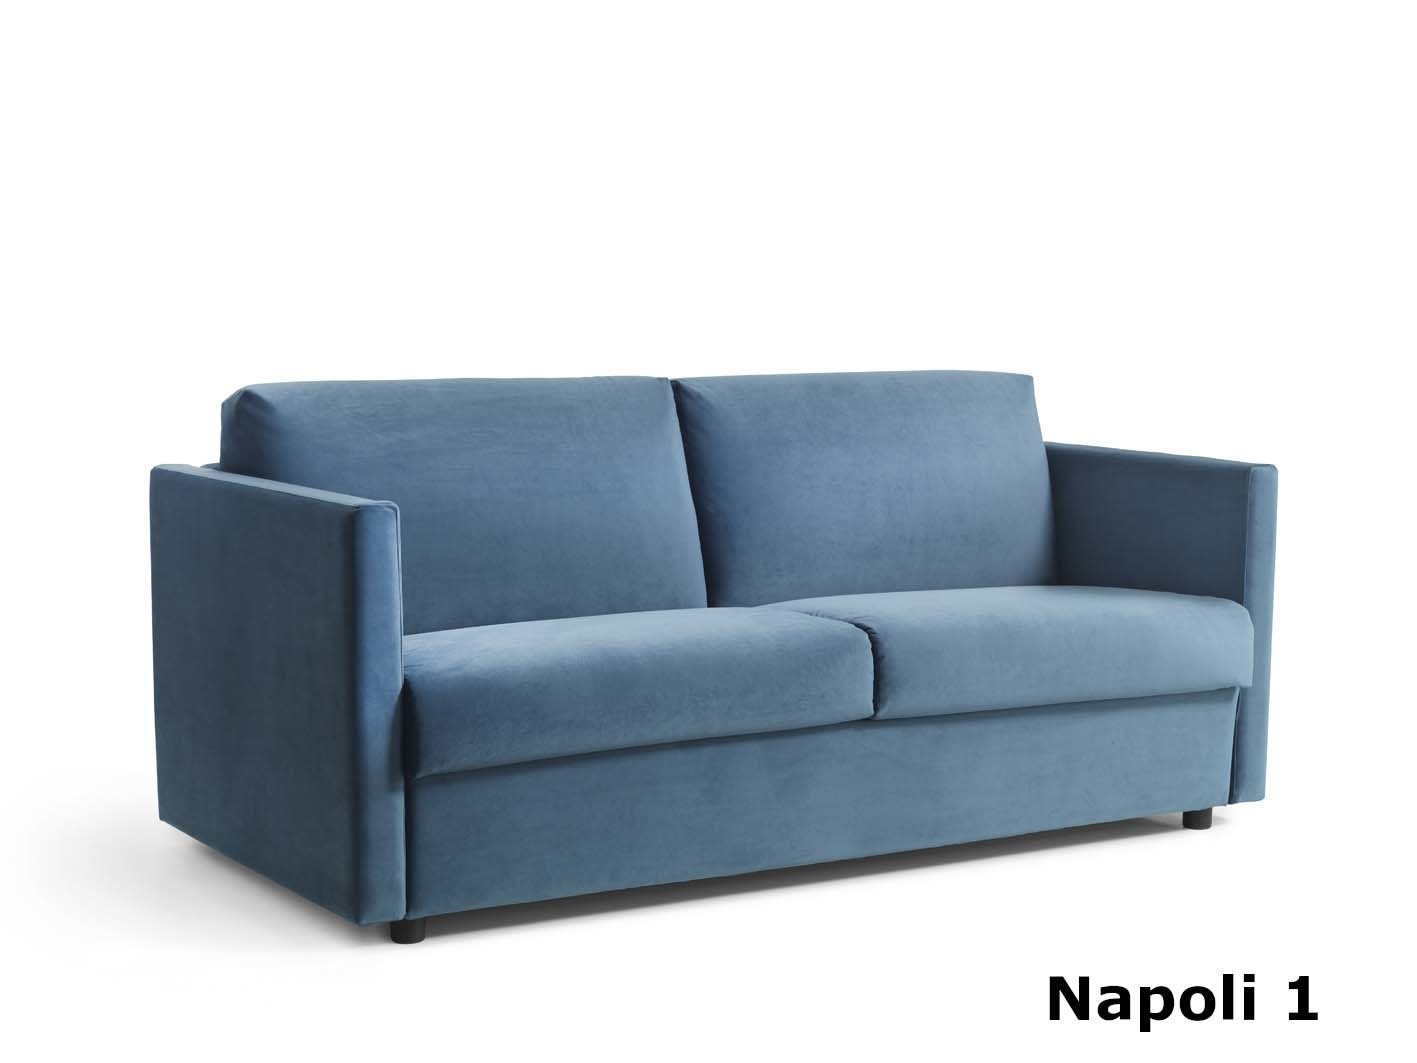 Napoli 1